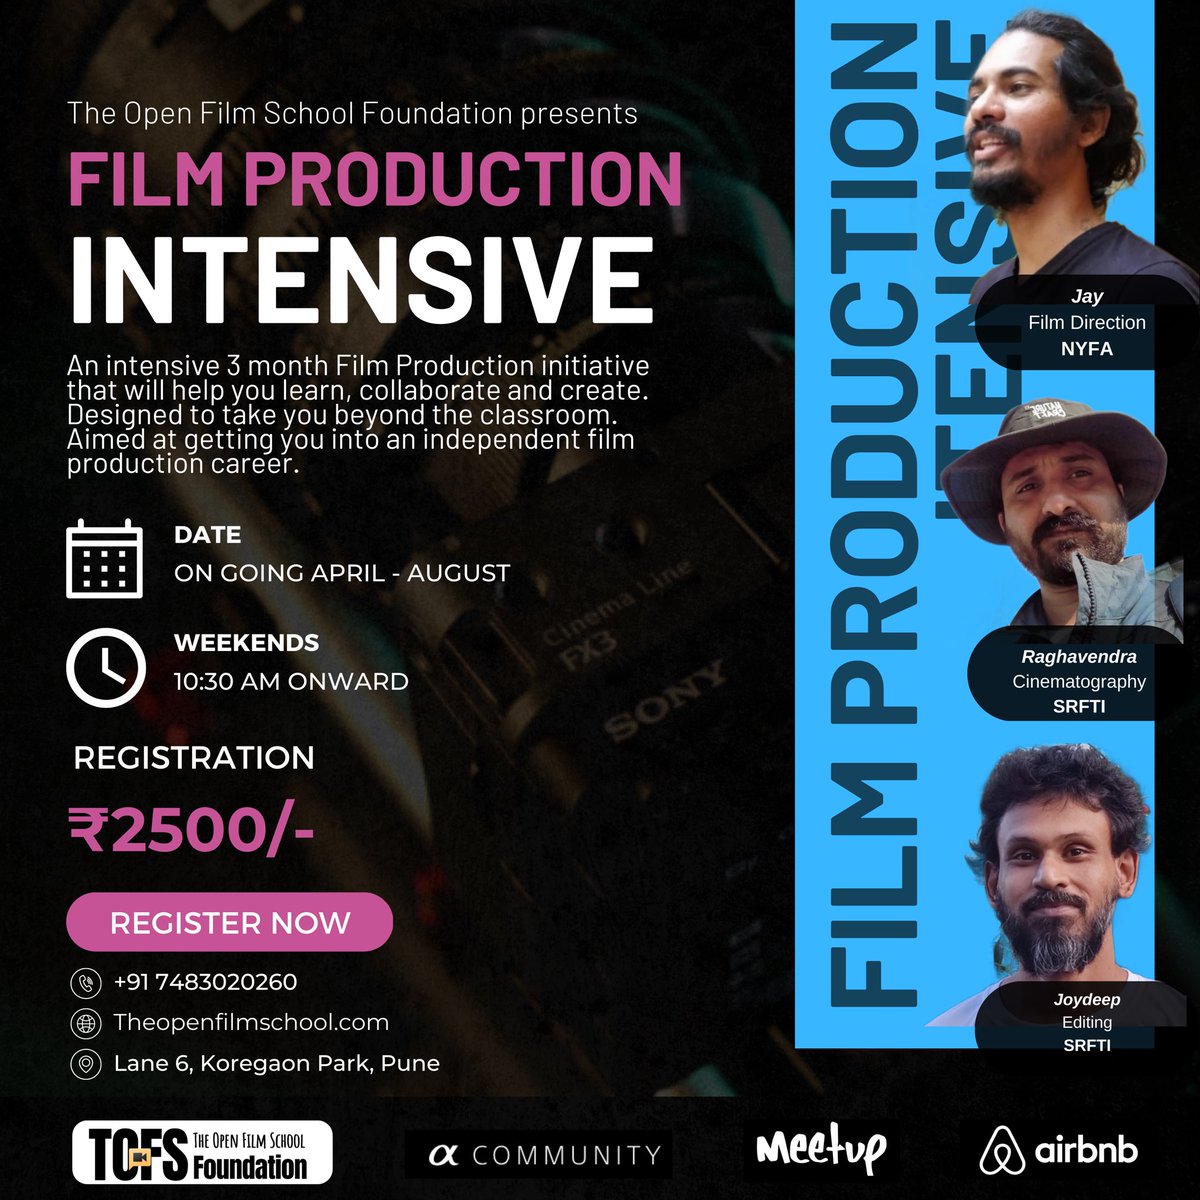 Film production 3 month intensive. #Filmmaking #filmproduction #filmschool #filmcourse #filmdirection #Cinematography #cinema #filmediting #Pune